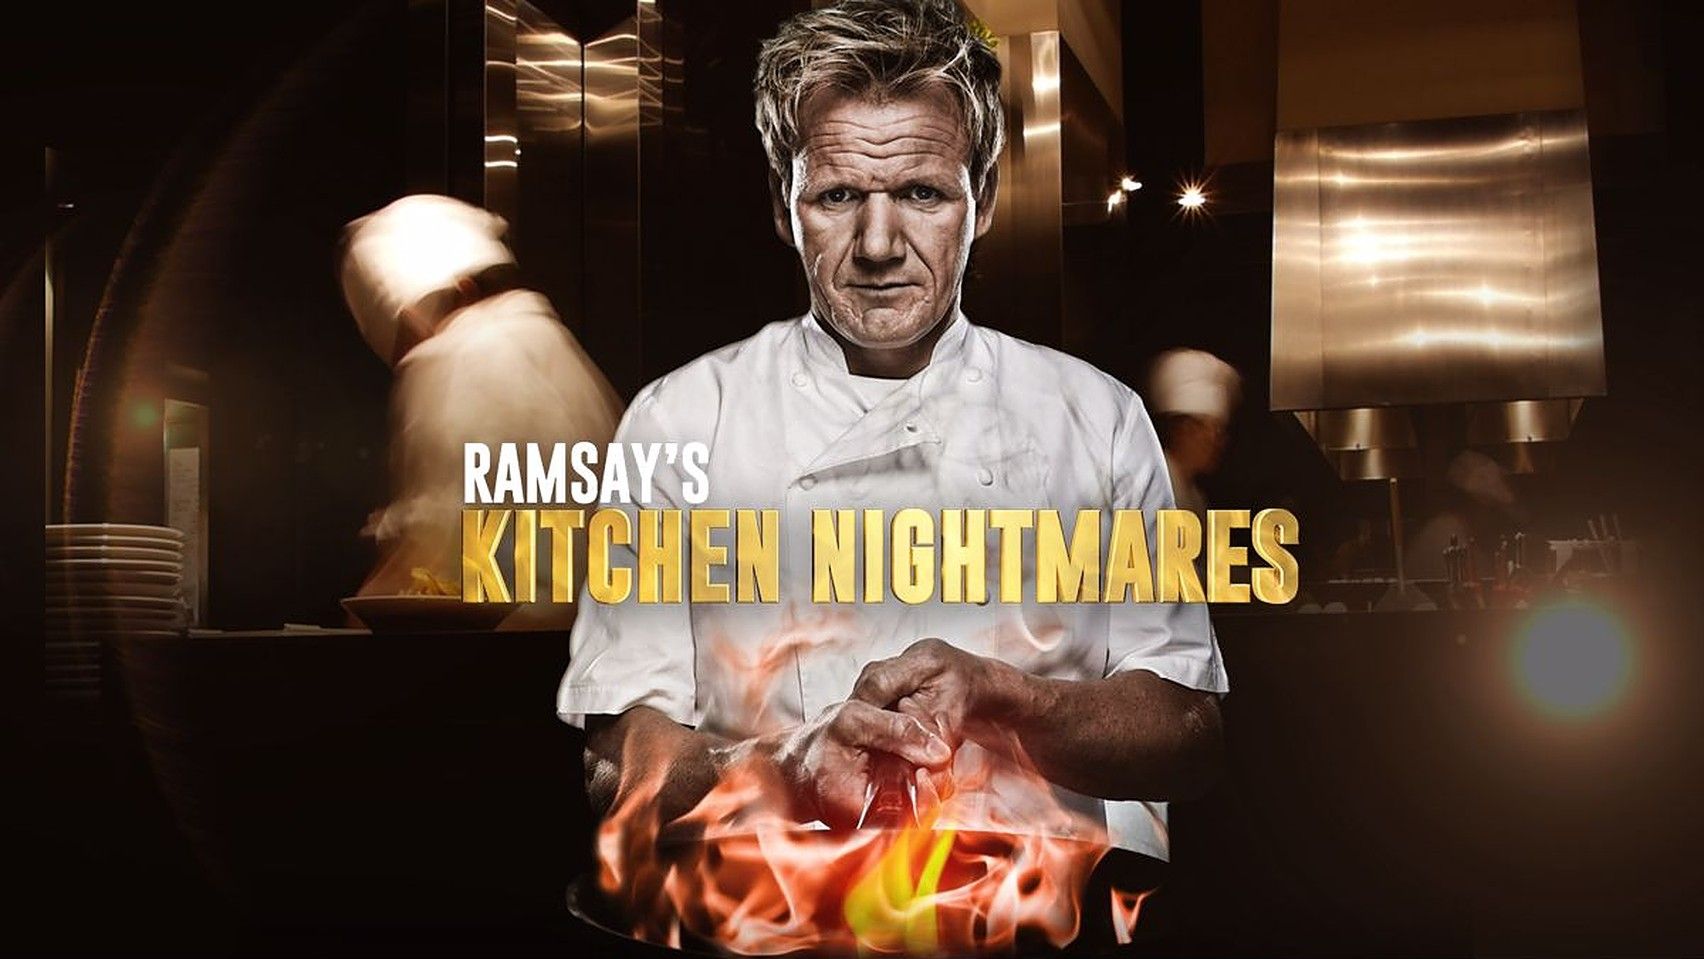 10 Worst Episodes Of Kitchen Nightmares (According To IMDb)